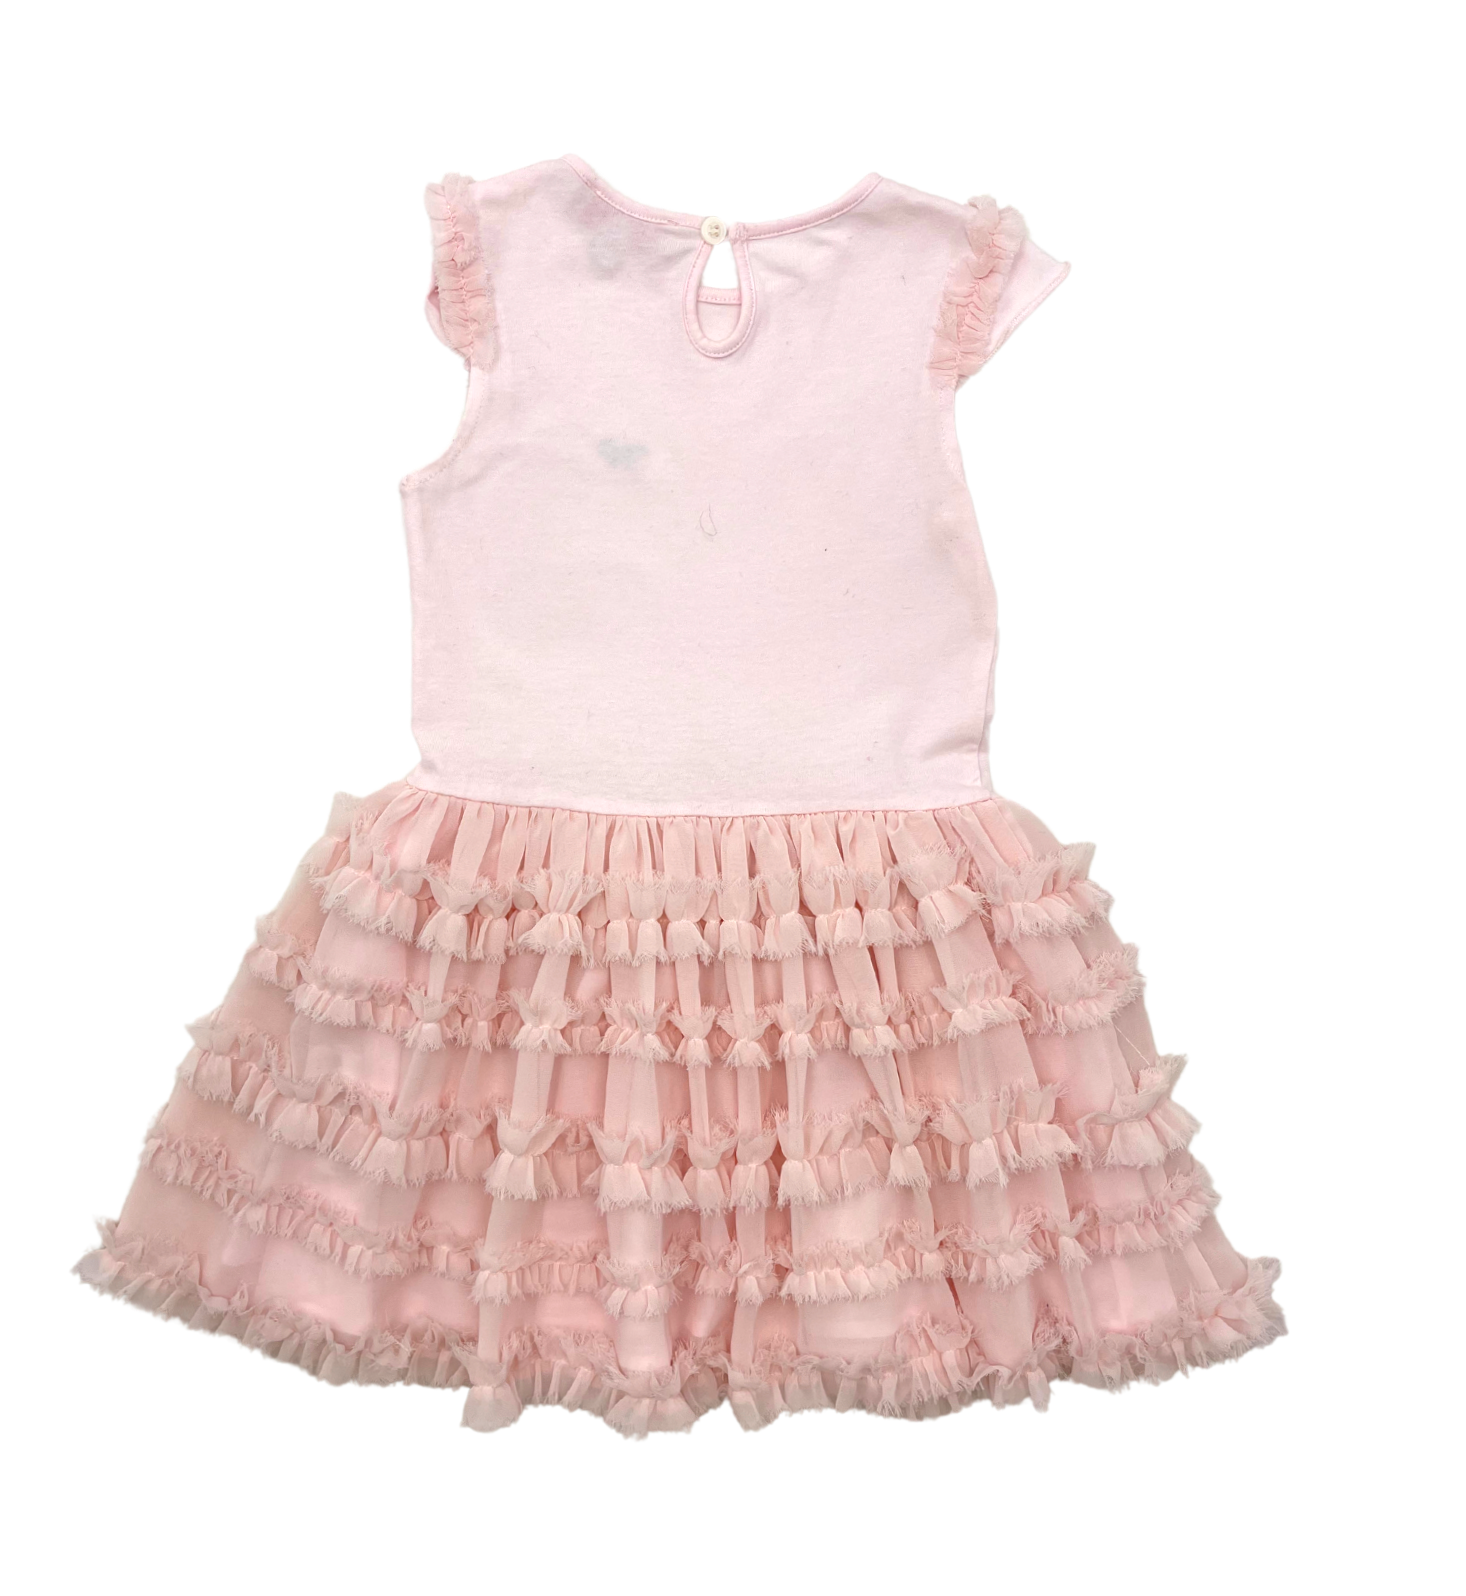 LILI GAUFRETTE - Pink dress - 3 years old